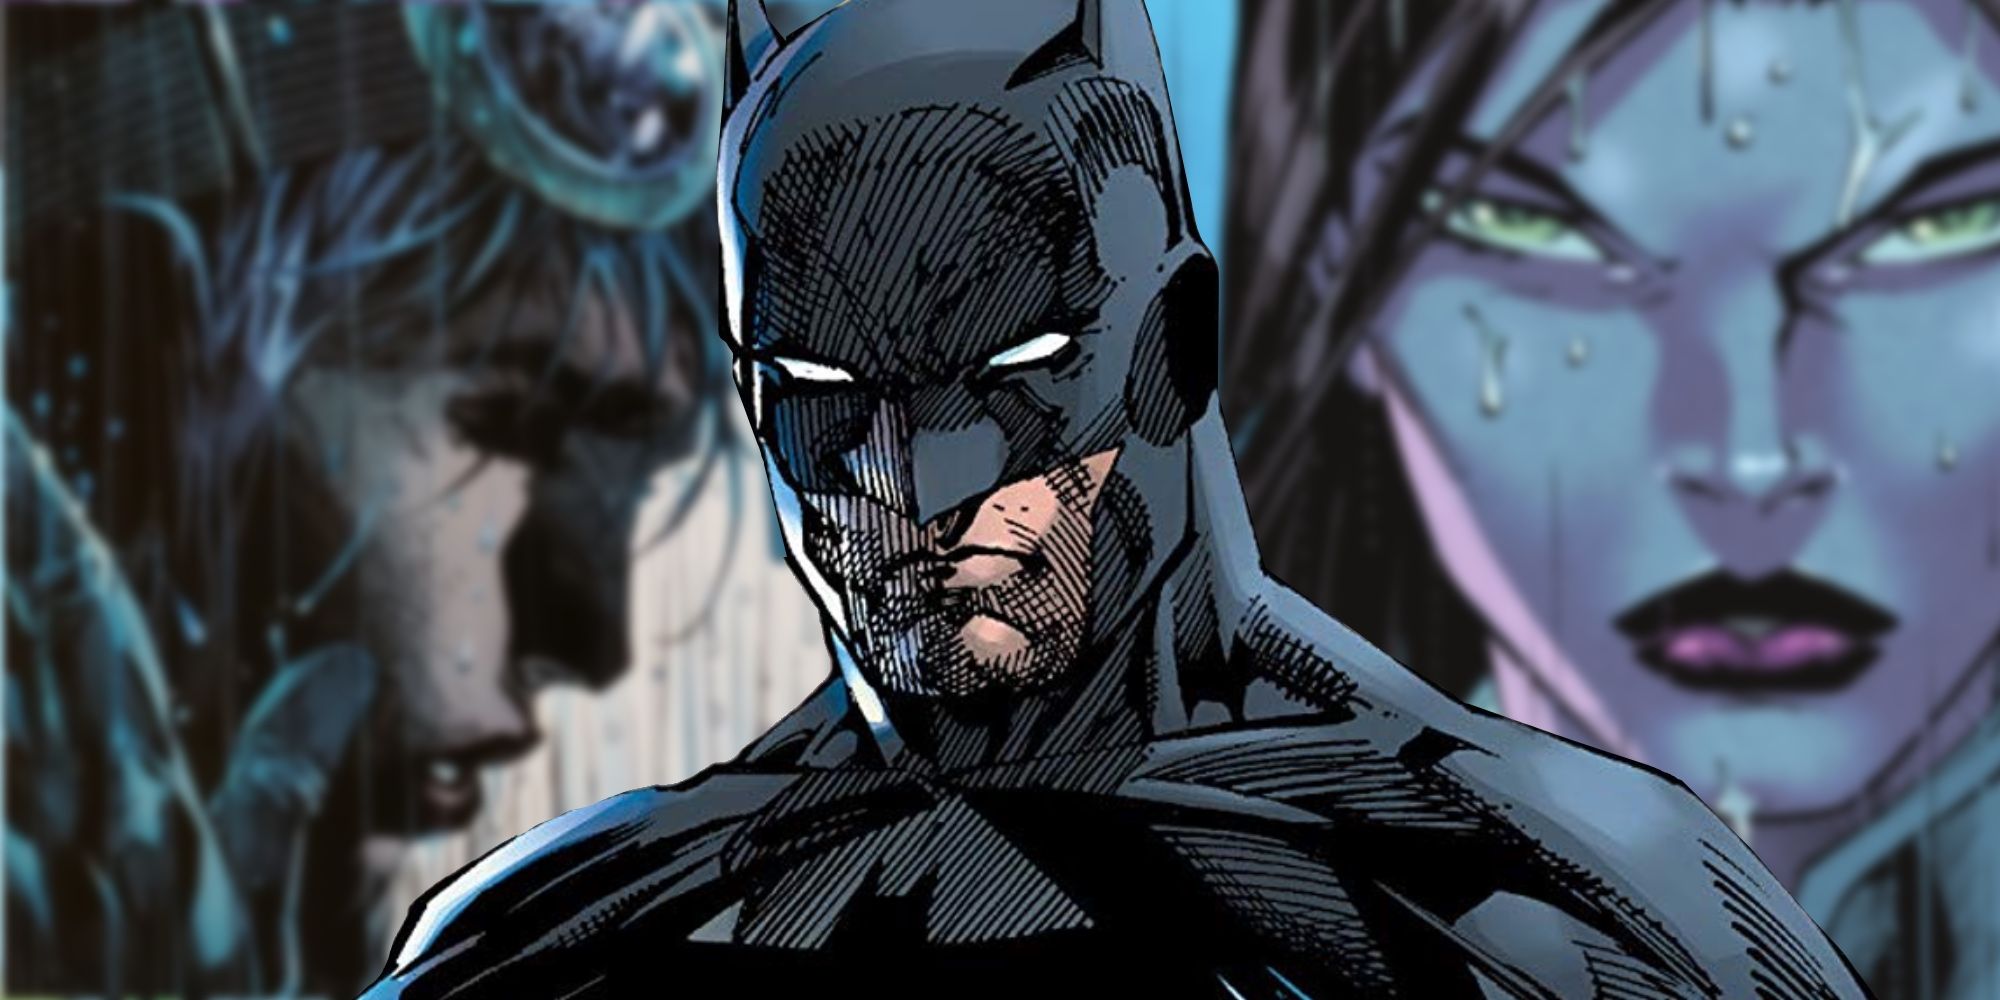 Lo siento Catwoman, Batman está reavivando su romance con Talia al Ghul